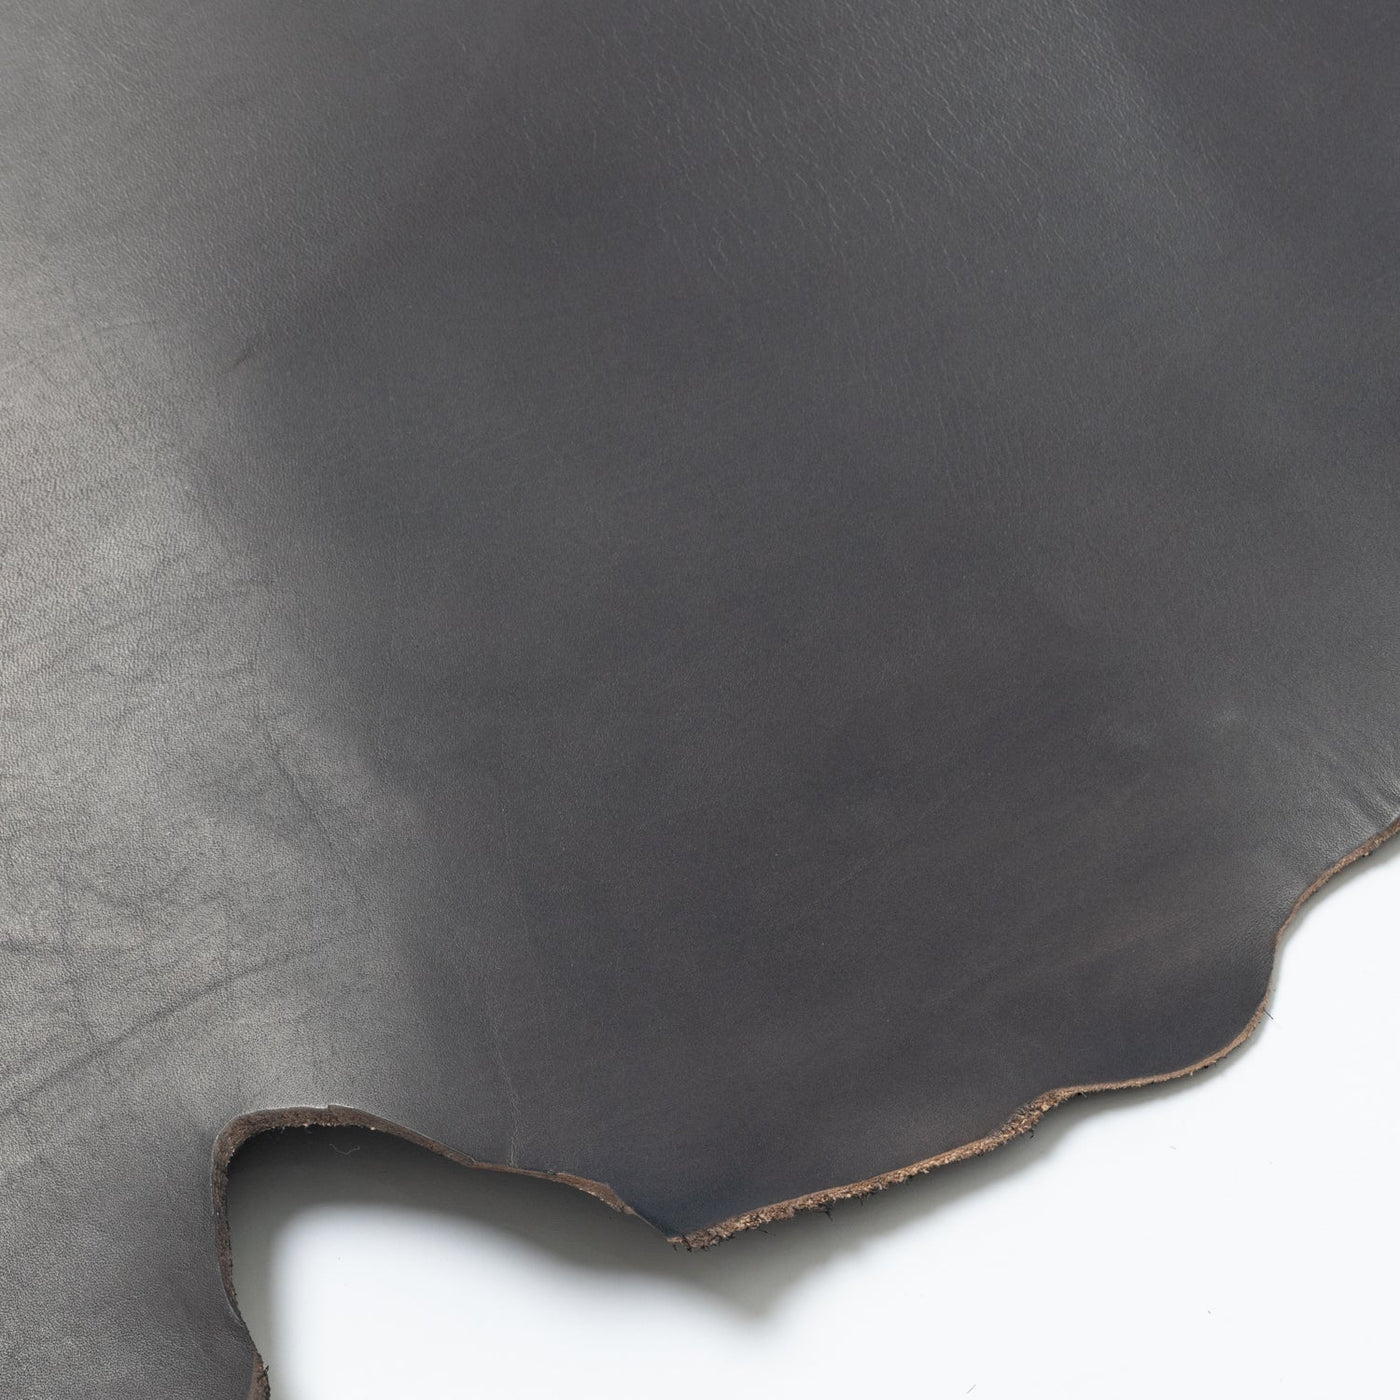 Tanned/smooth leather half-cut/dark gray